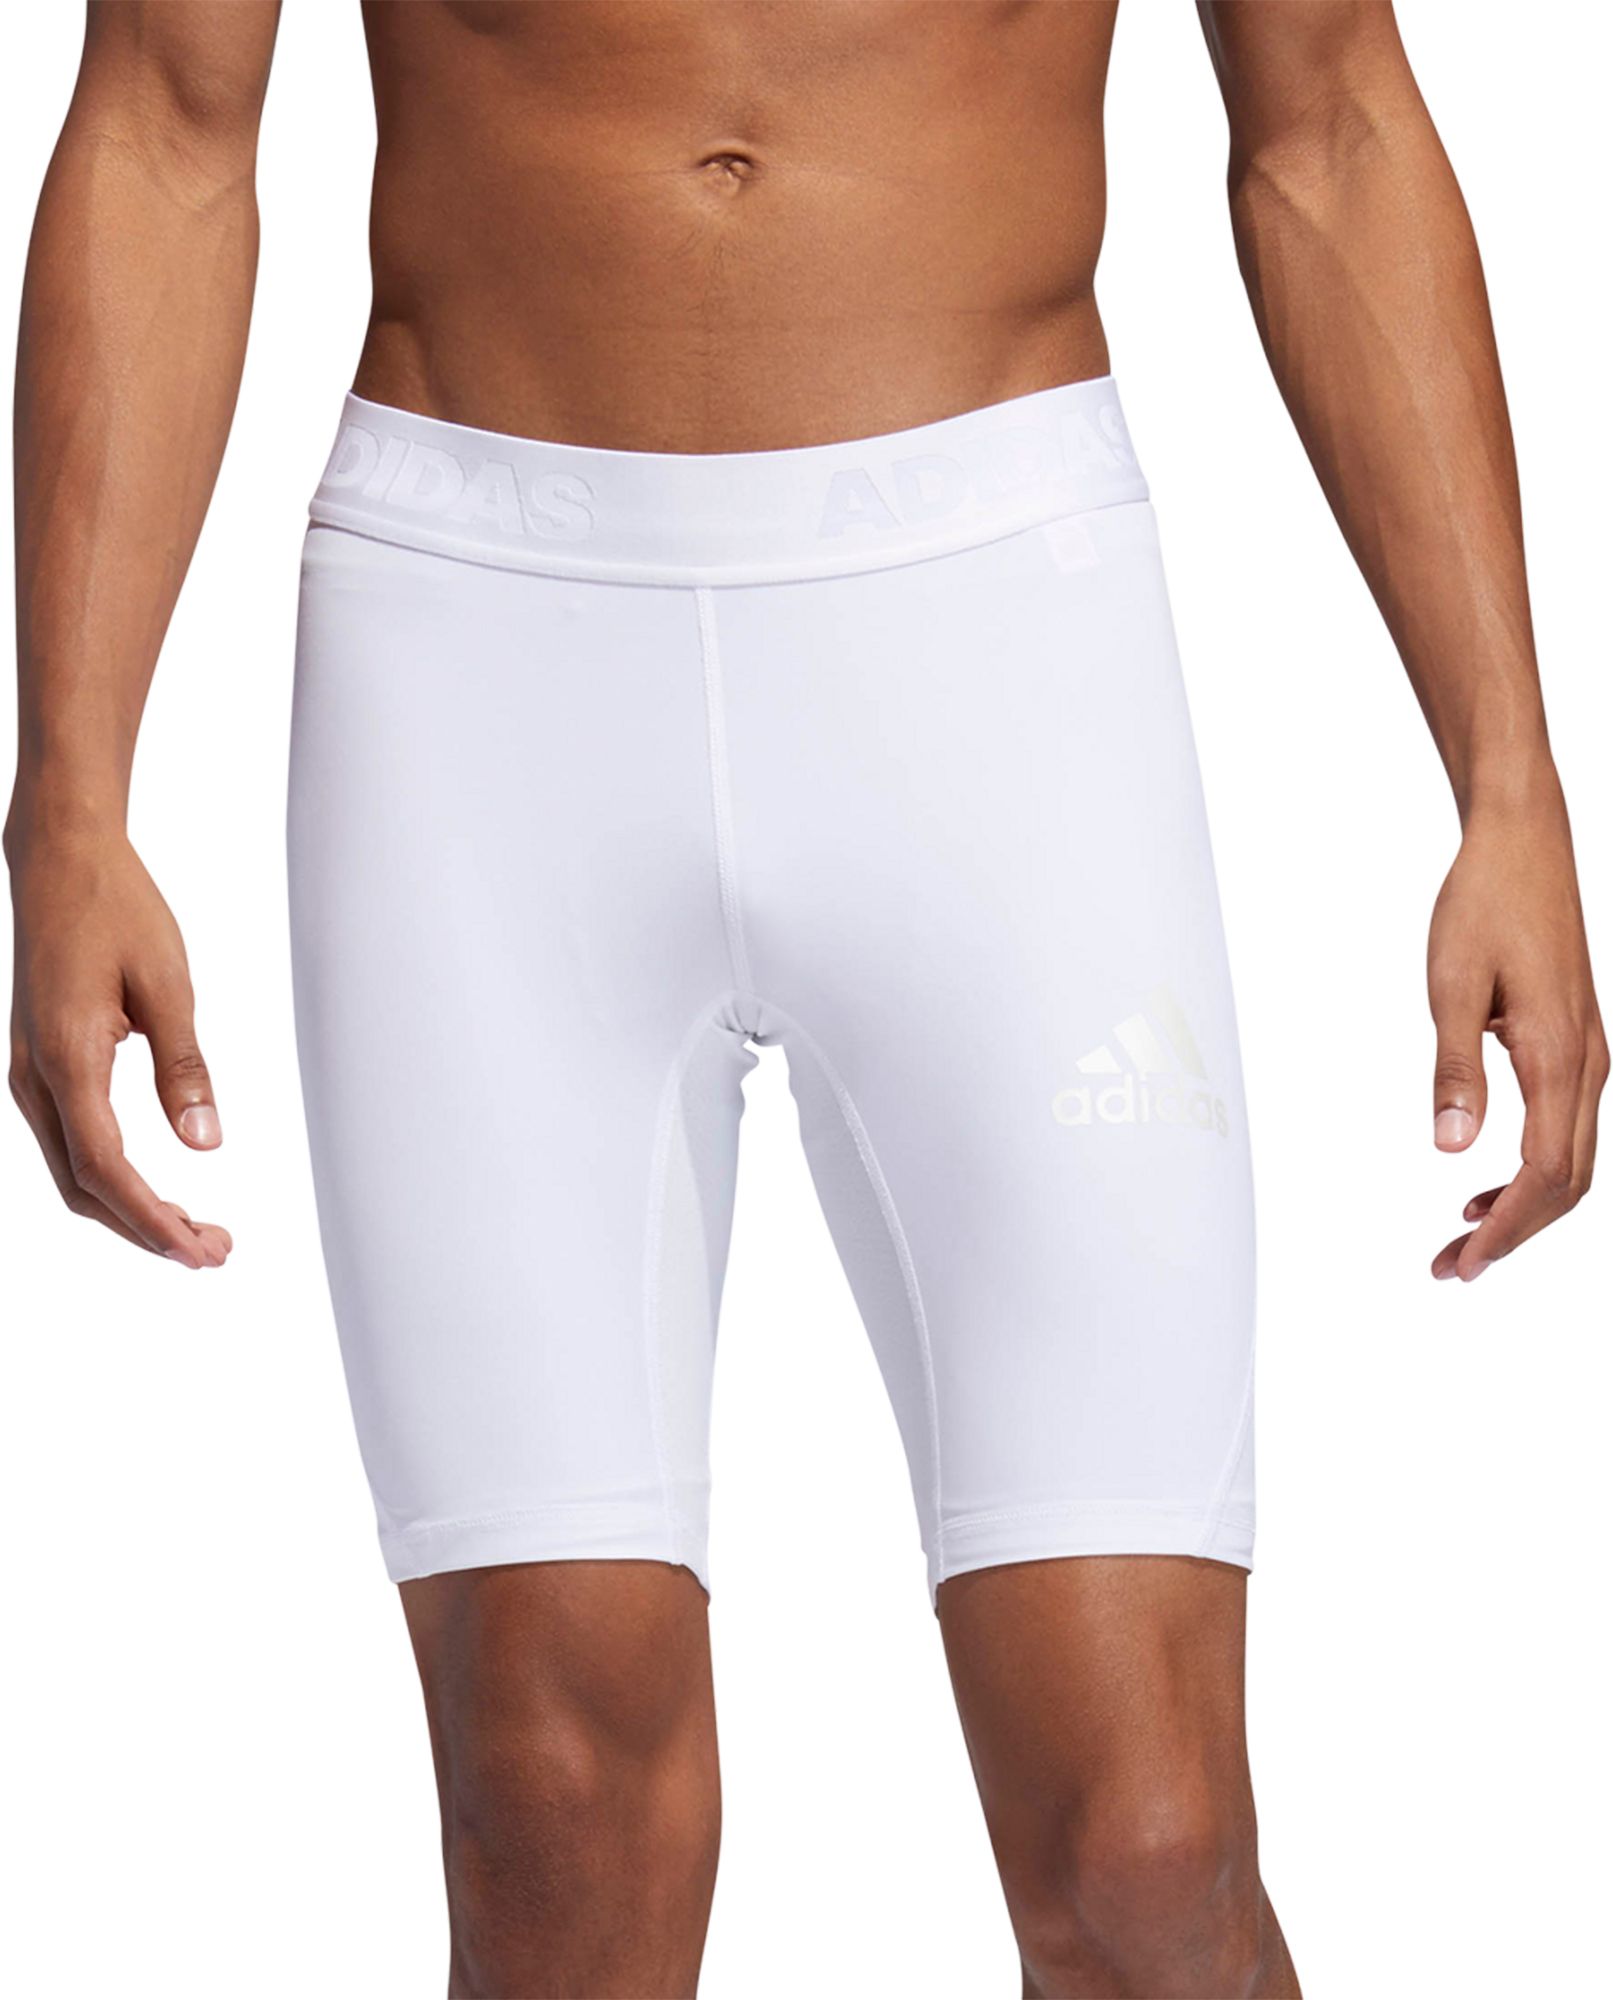 white adidas compression pants